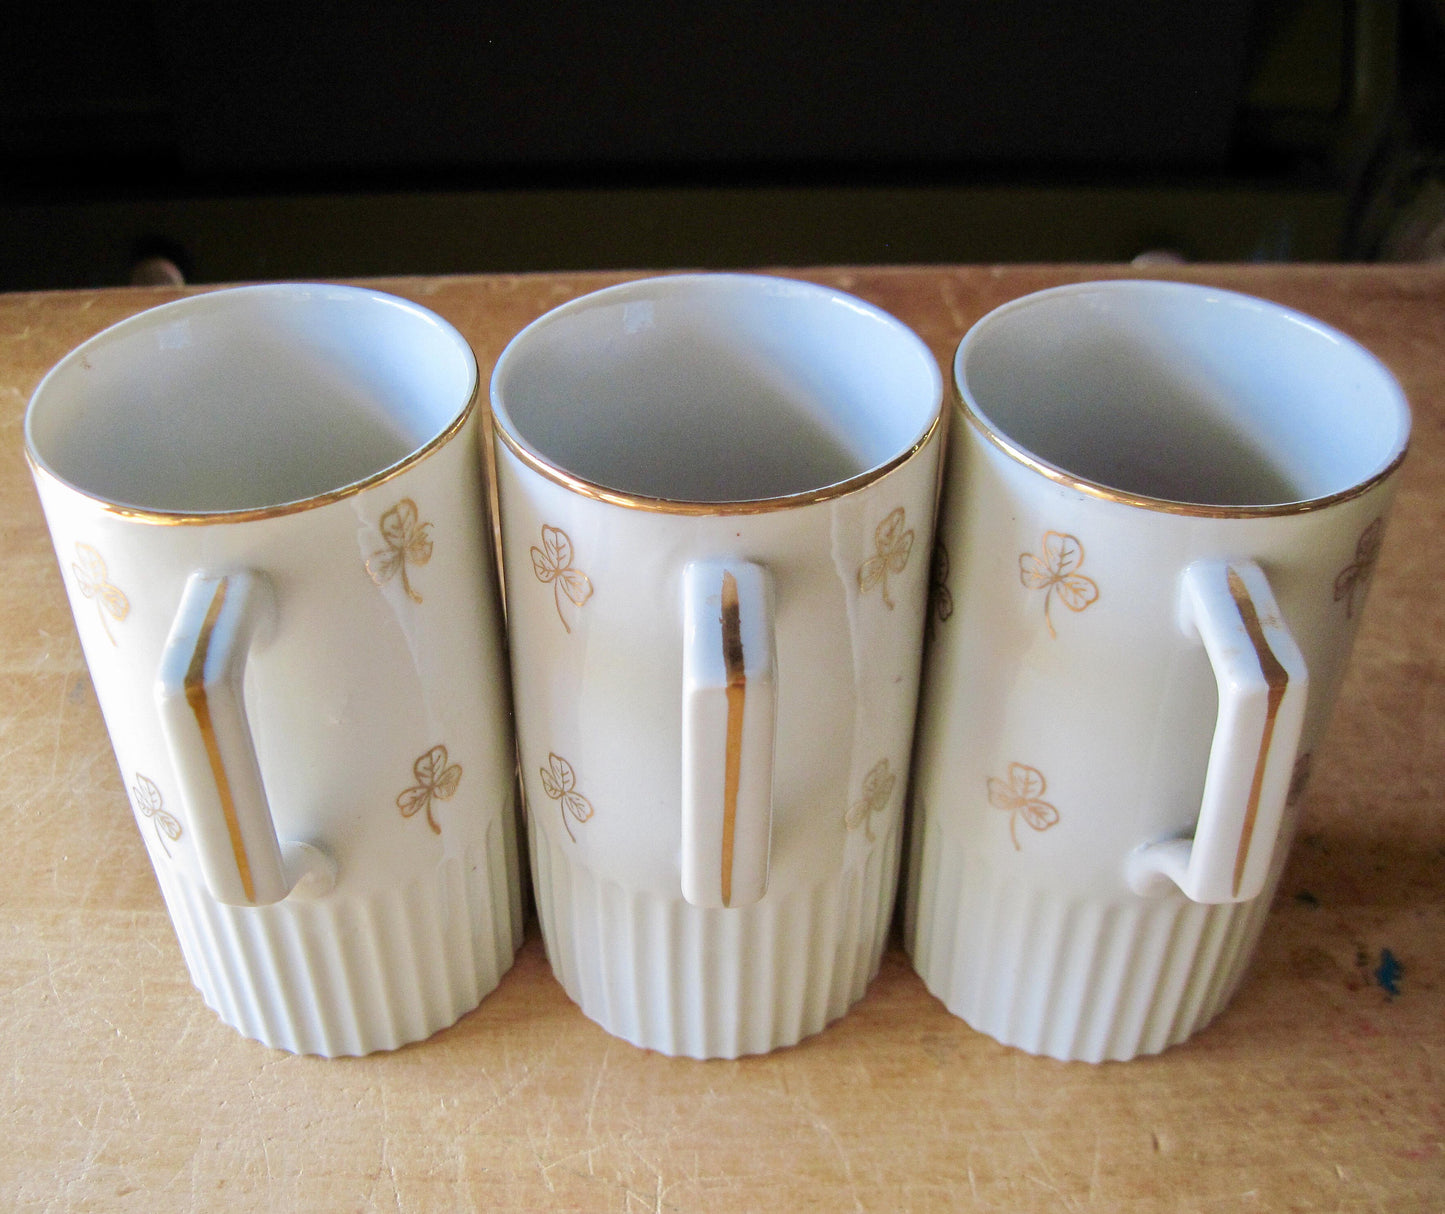 Vintage White Irish Coffee Mugs with Gold Clover Motif